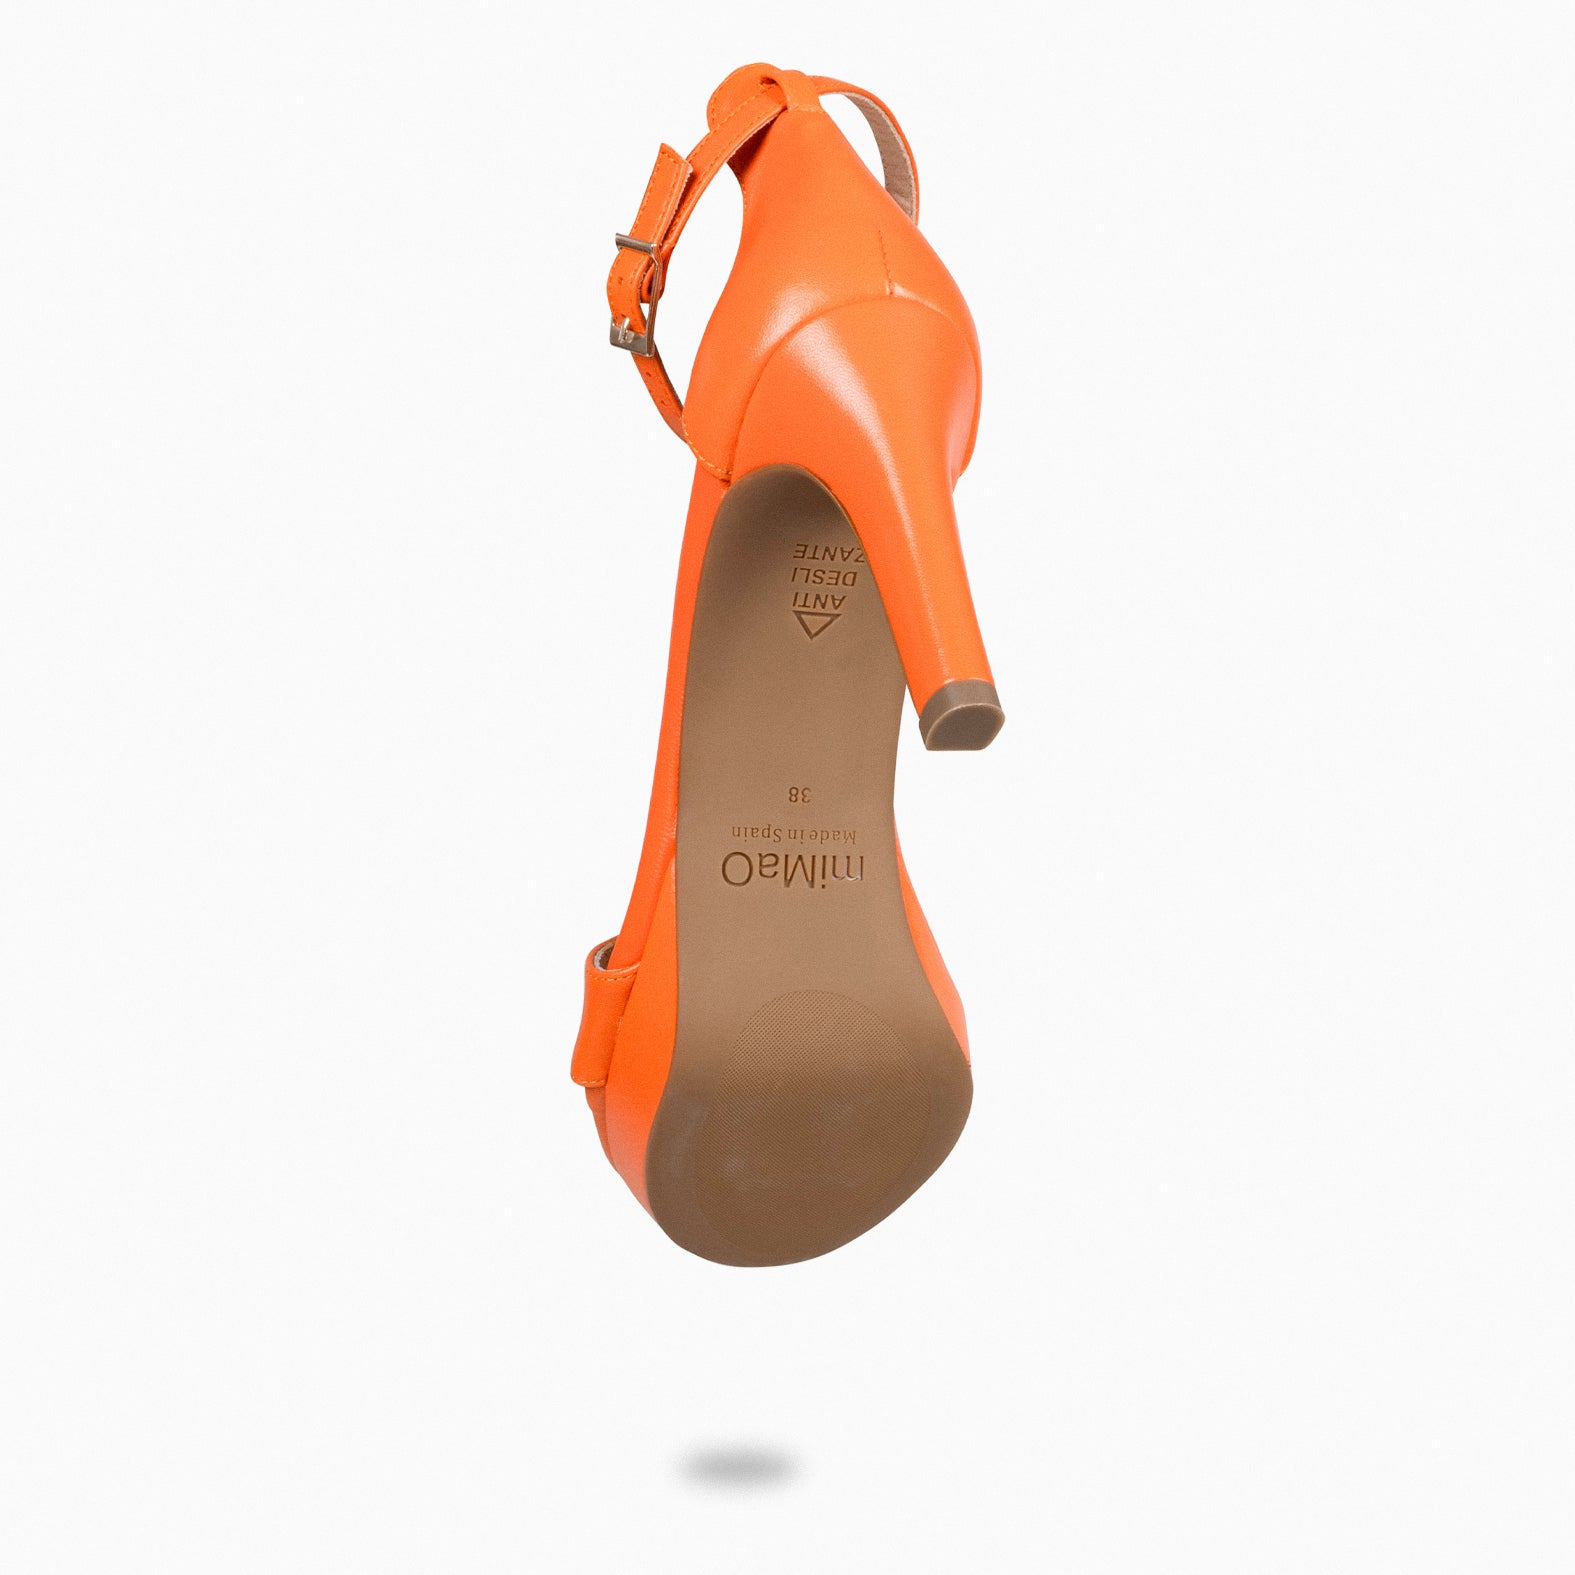 PARTY – ORANGE high-heeled platform sandals